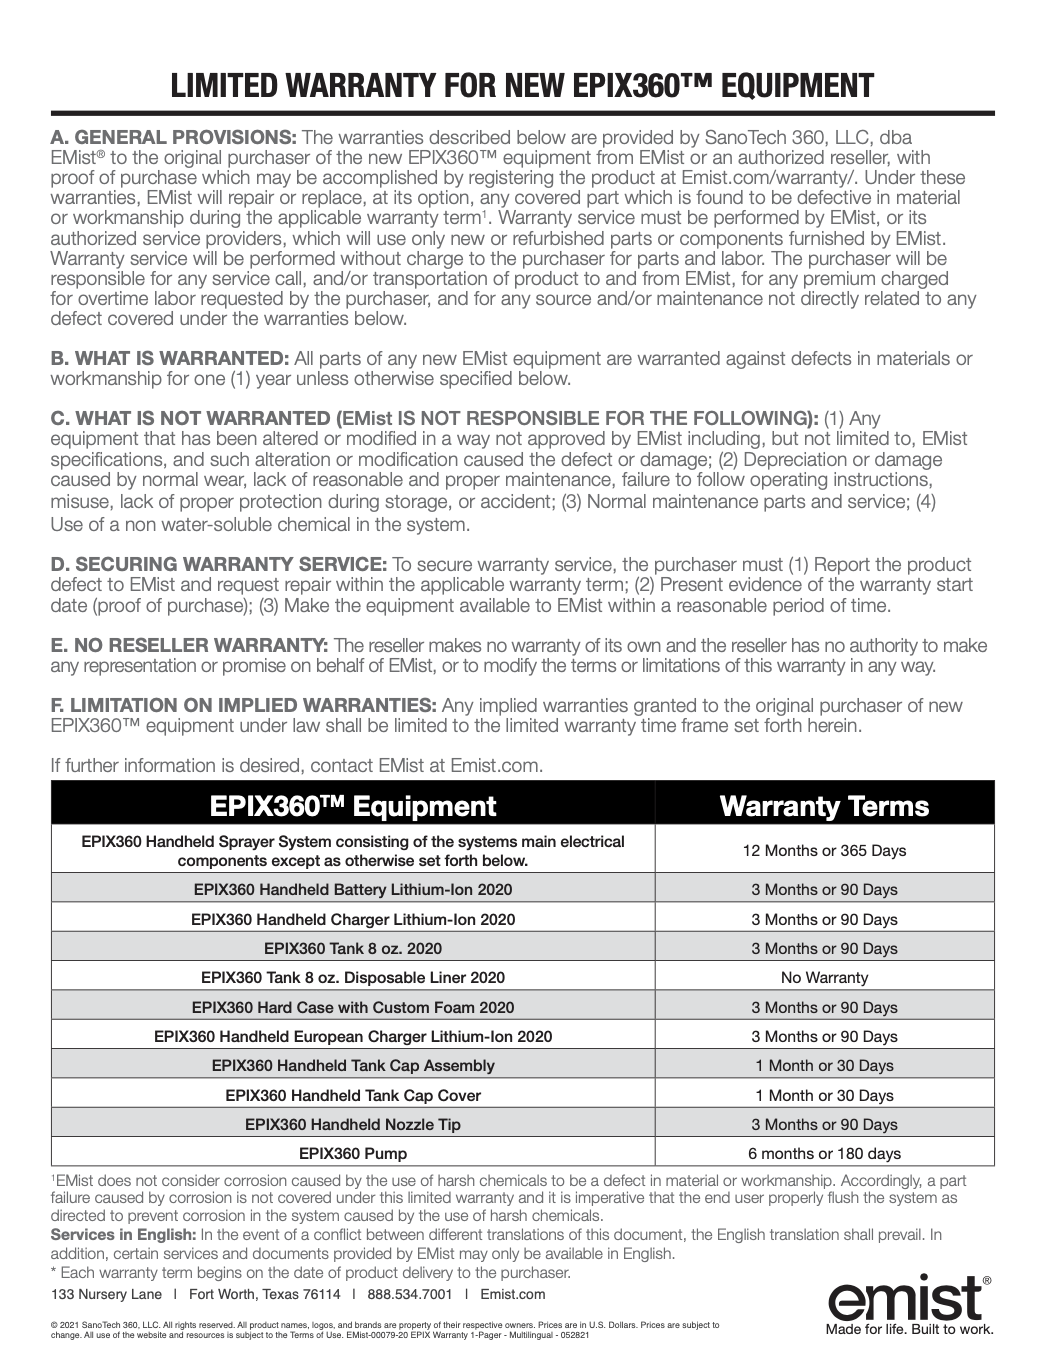 EMist EPIX360 User Manual PDF image thumbnail